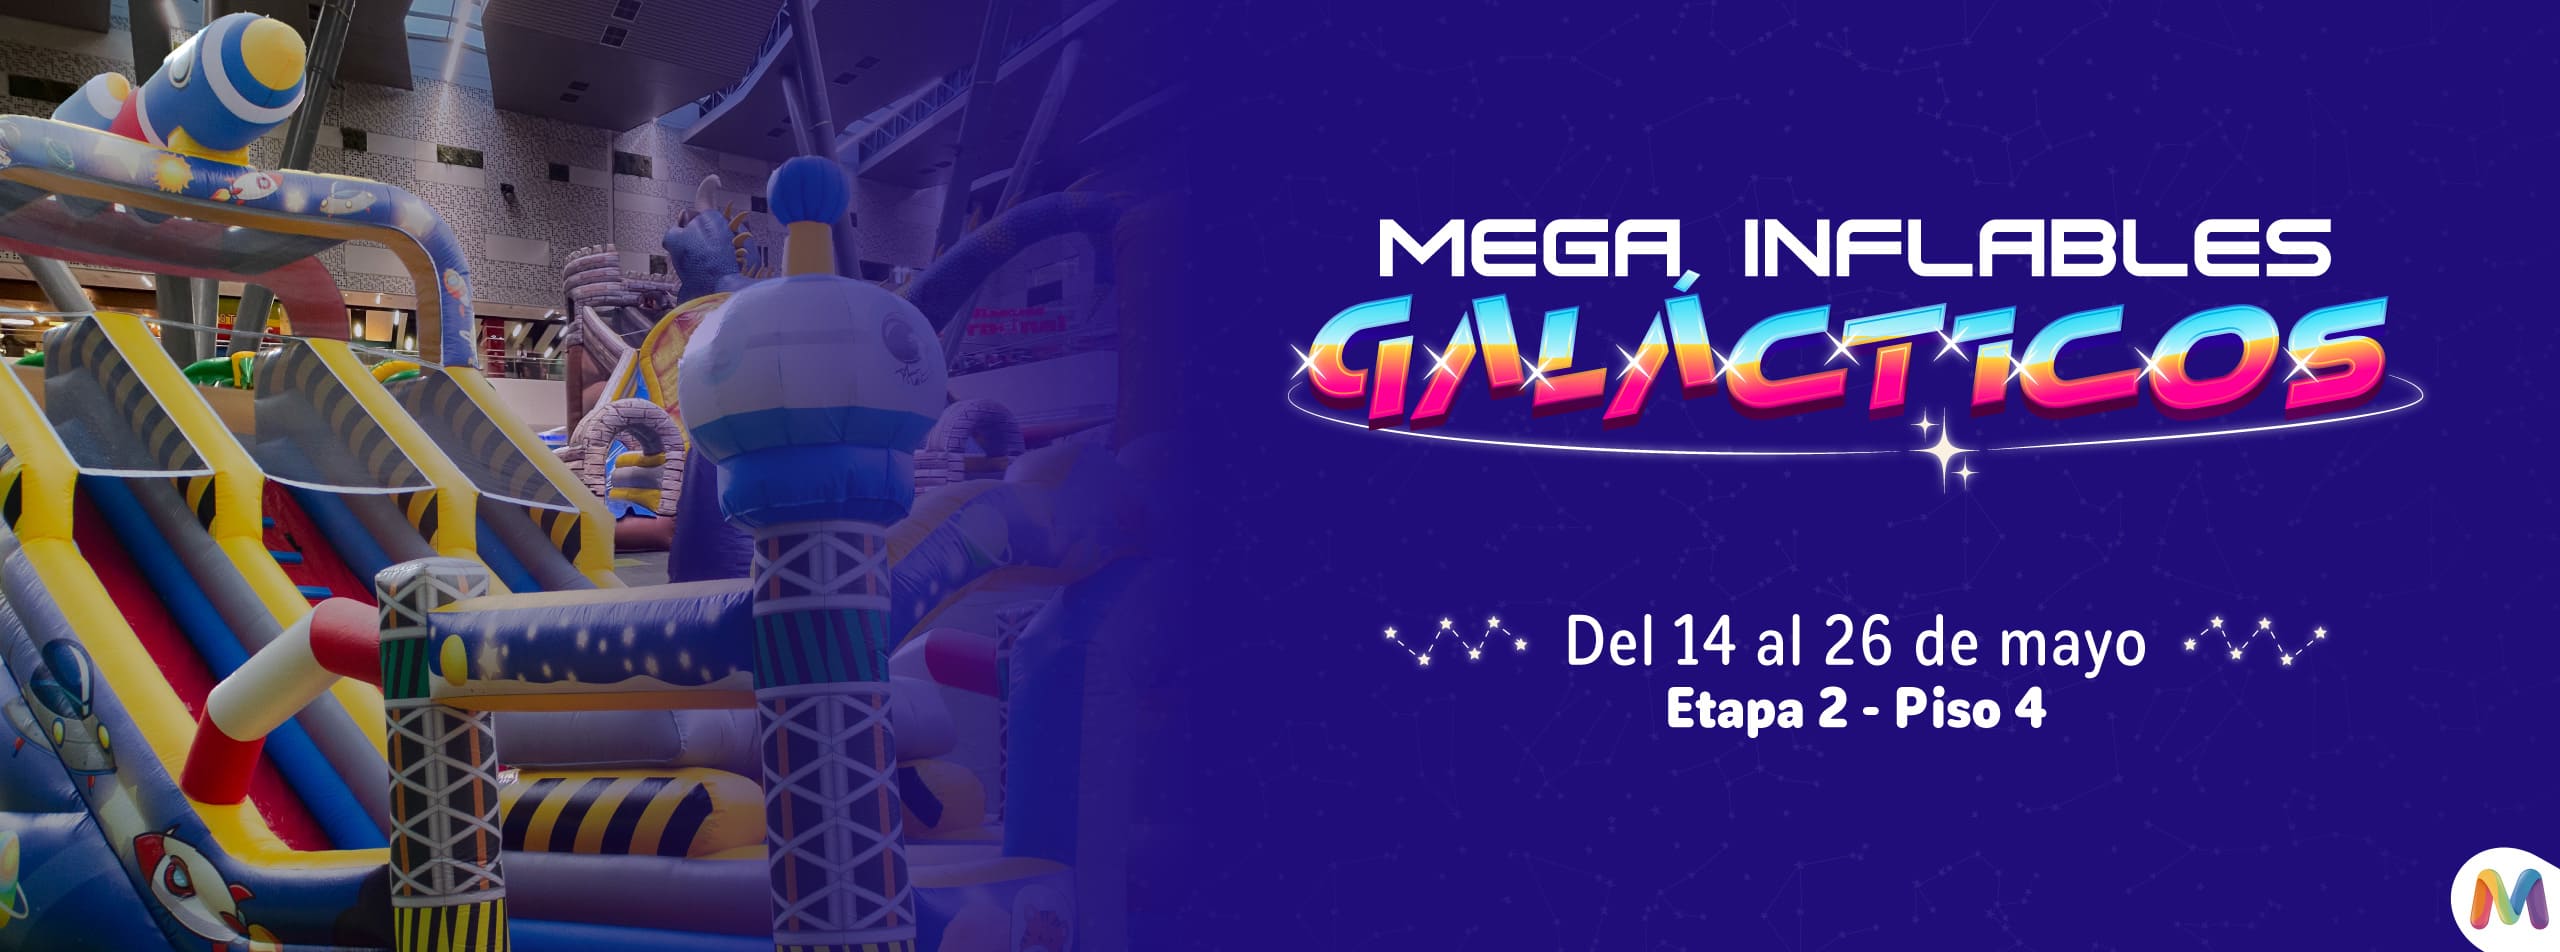 Mega Inflables Galacticos centro comercial Mayorca VE